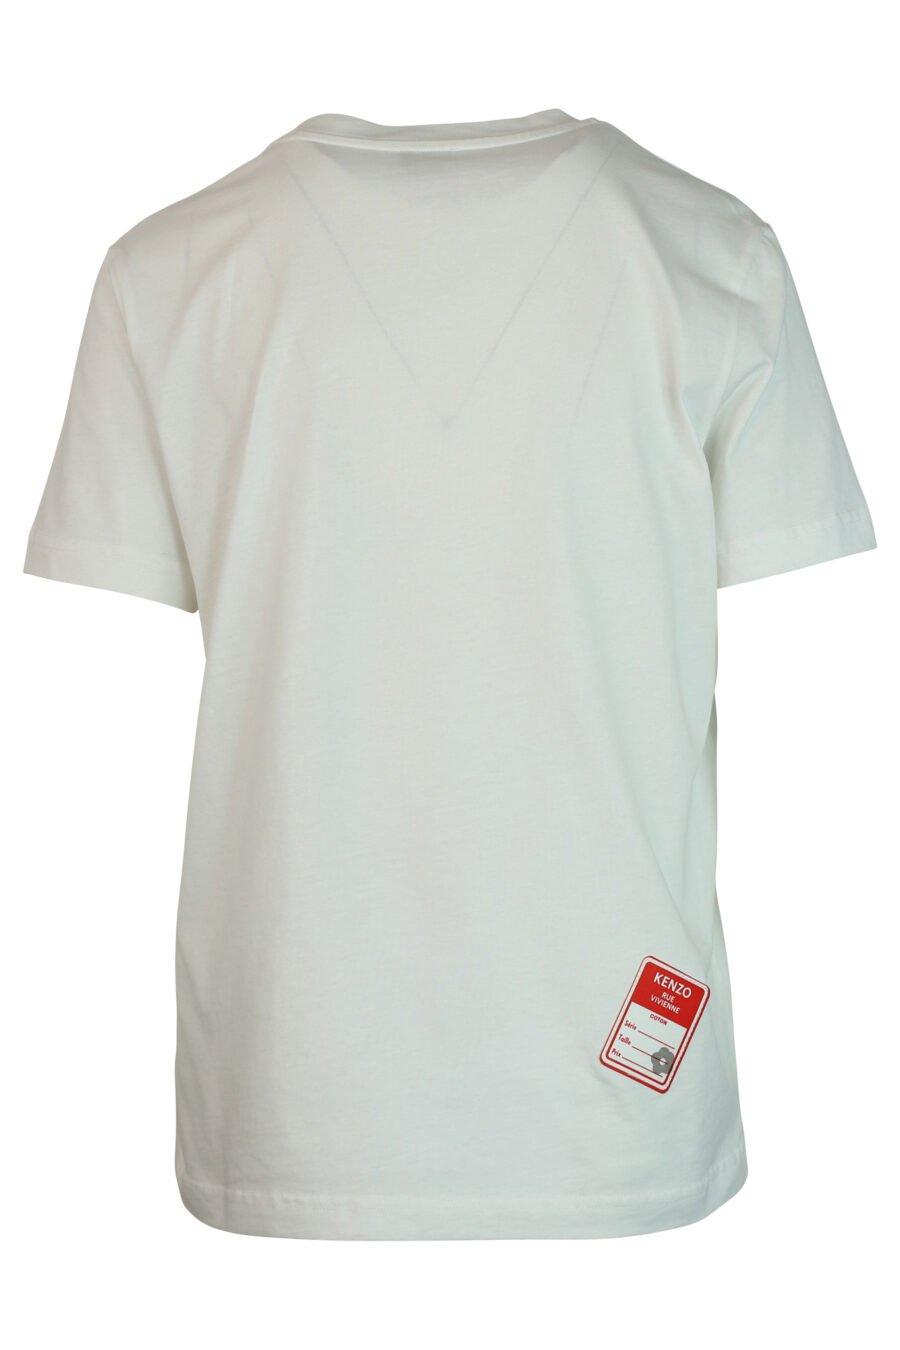 T-shirt blanc avec maxilogo noir "rue vivenne" - 3612230461161 2